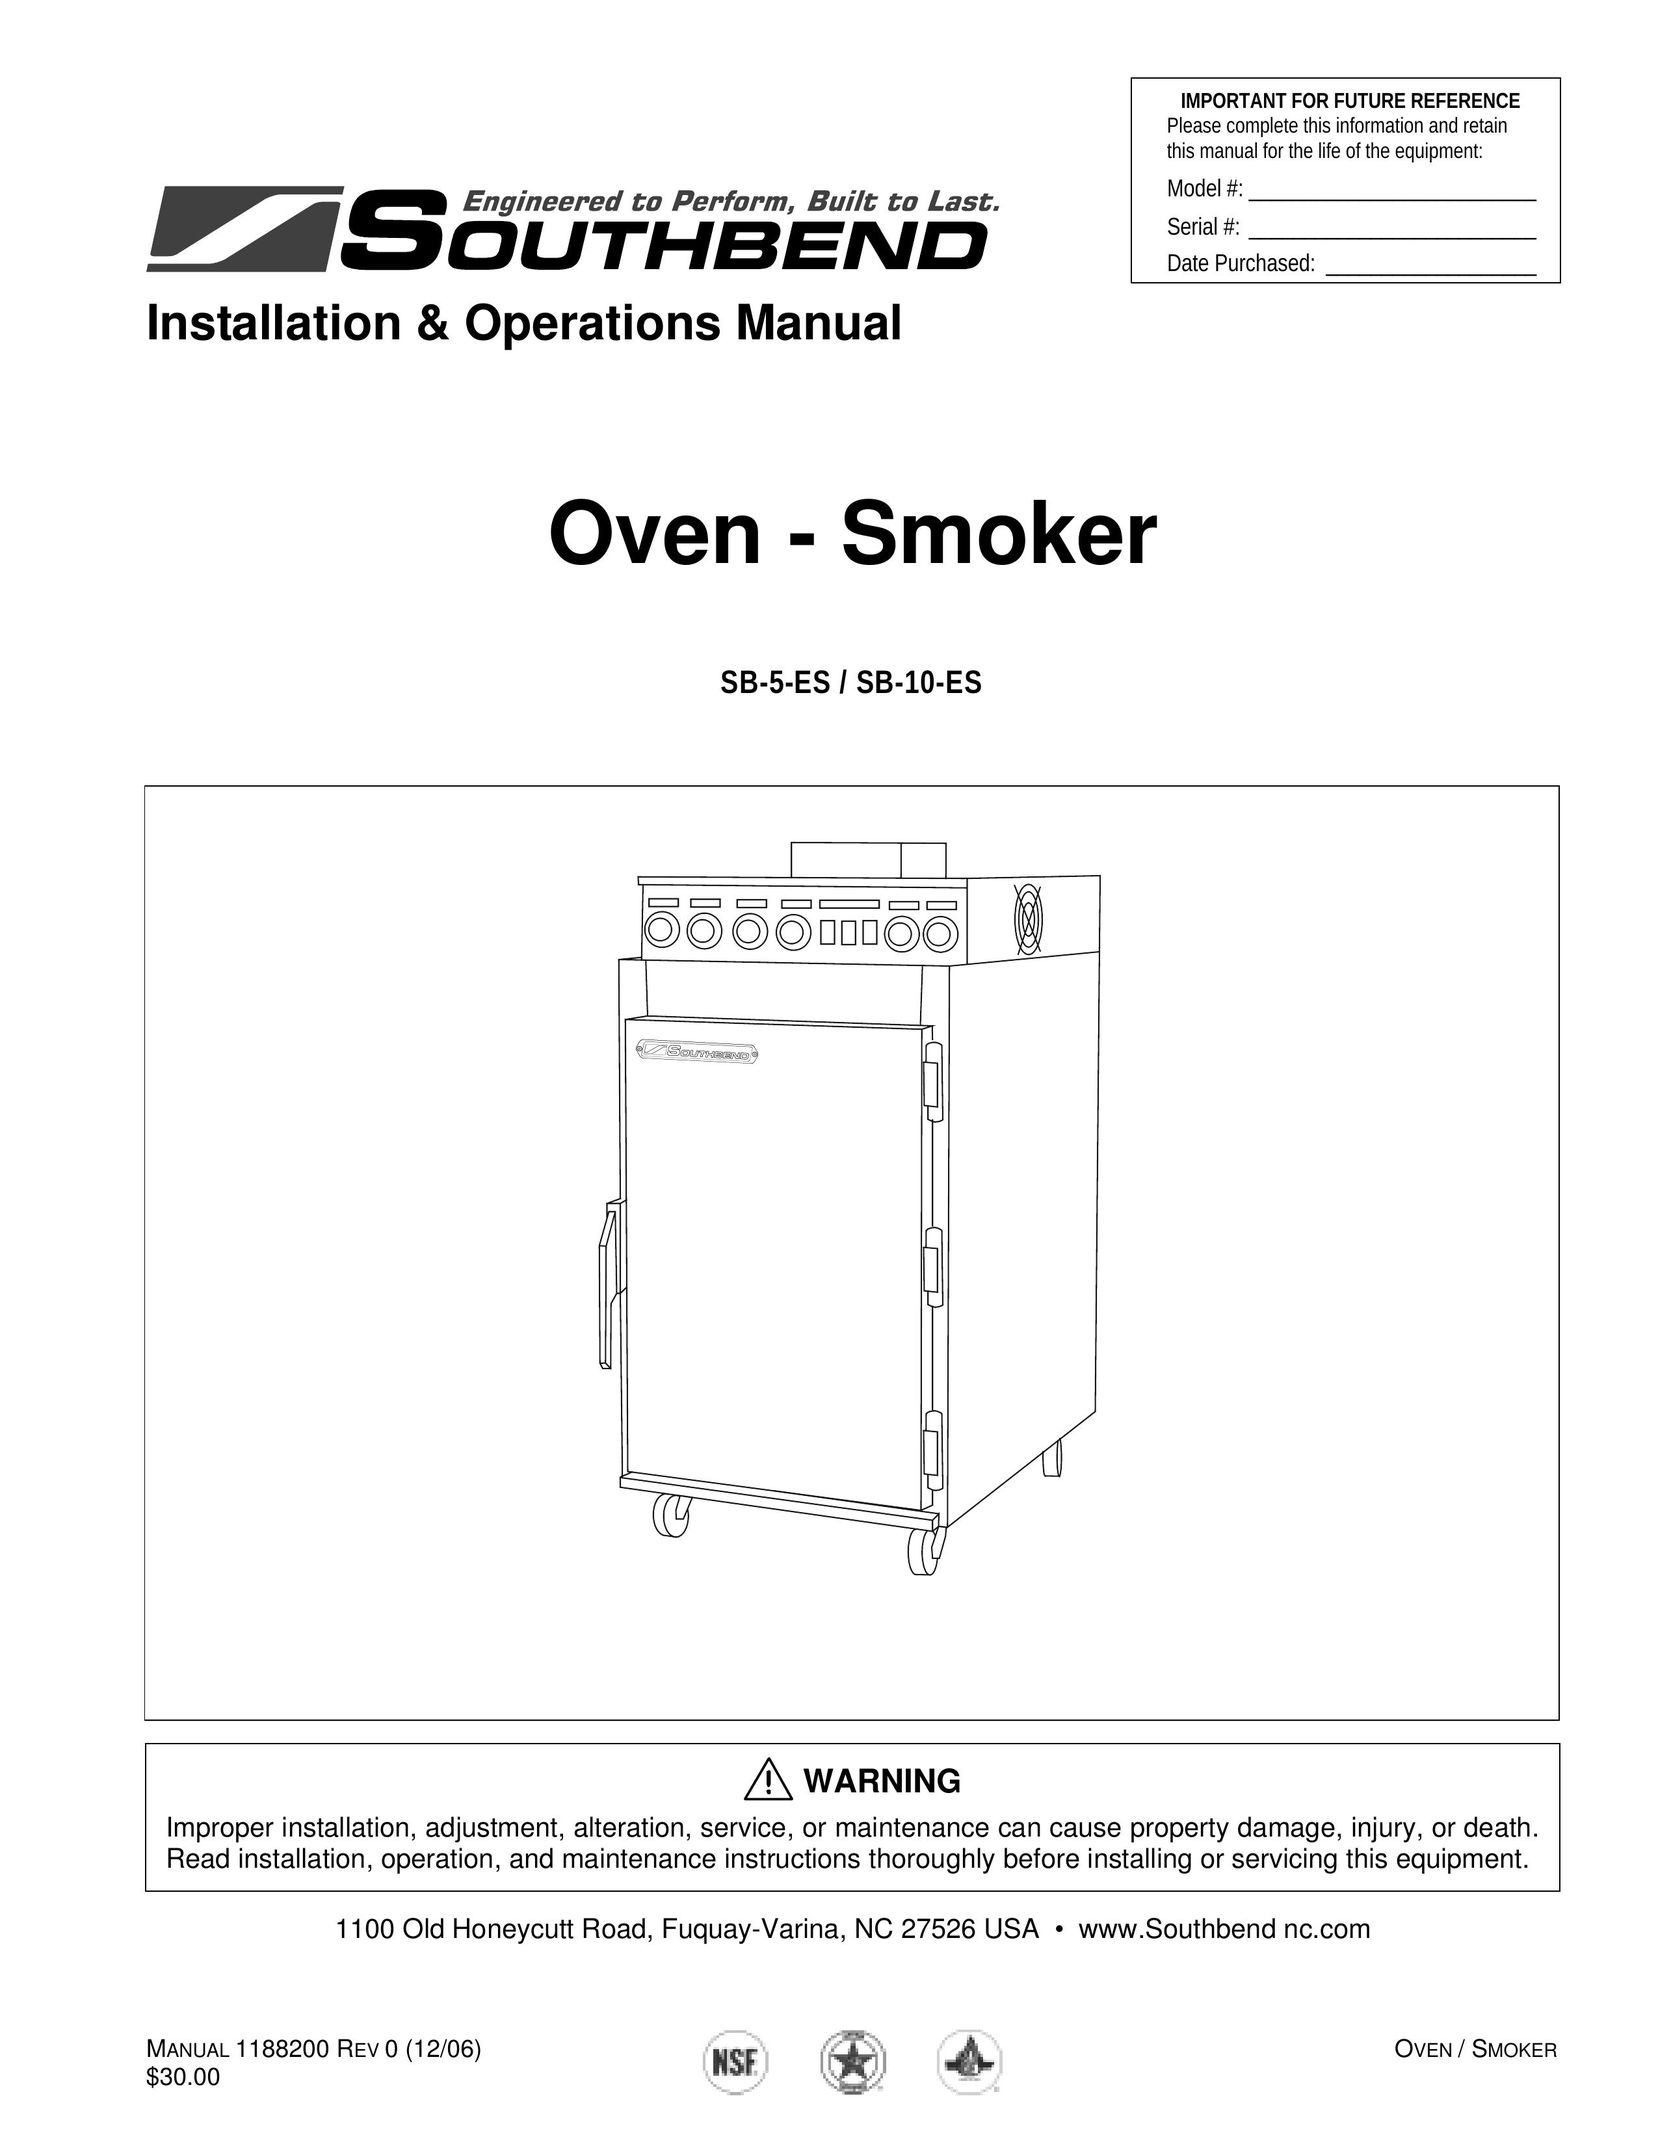 Southbend SB-10-ES Oven User Manual